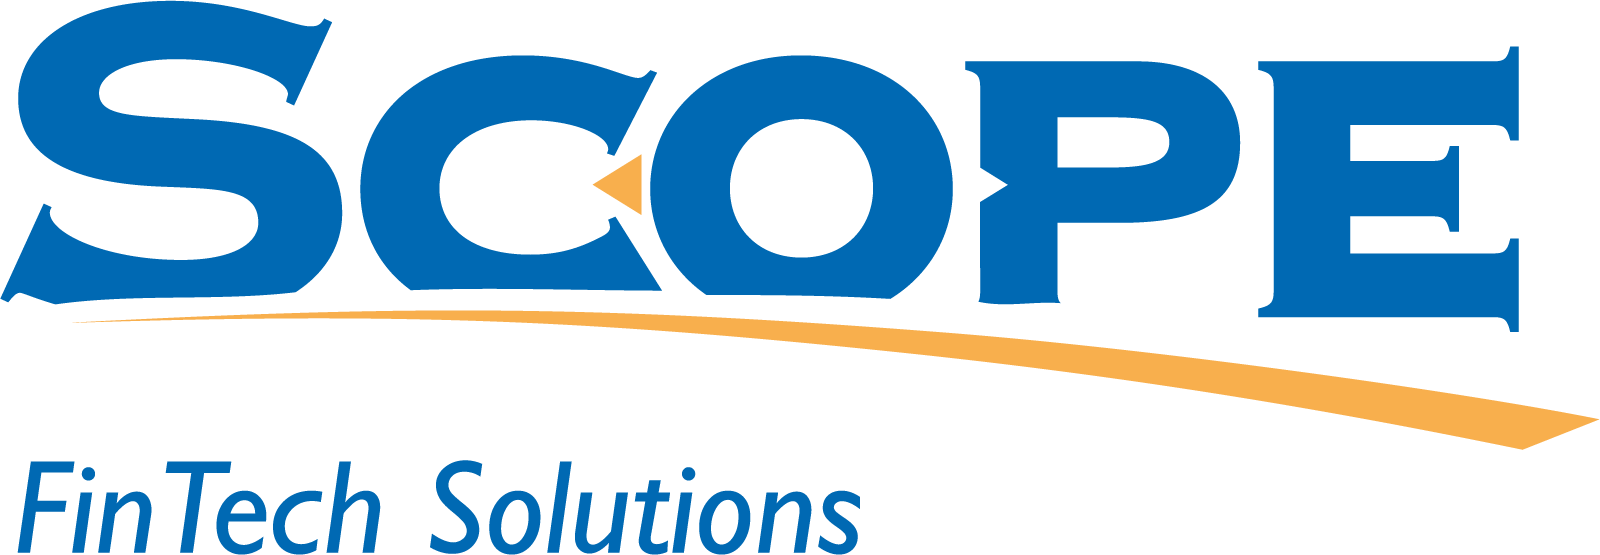 Scope FinTech Solutions